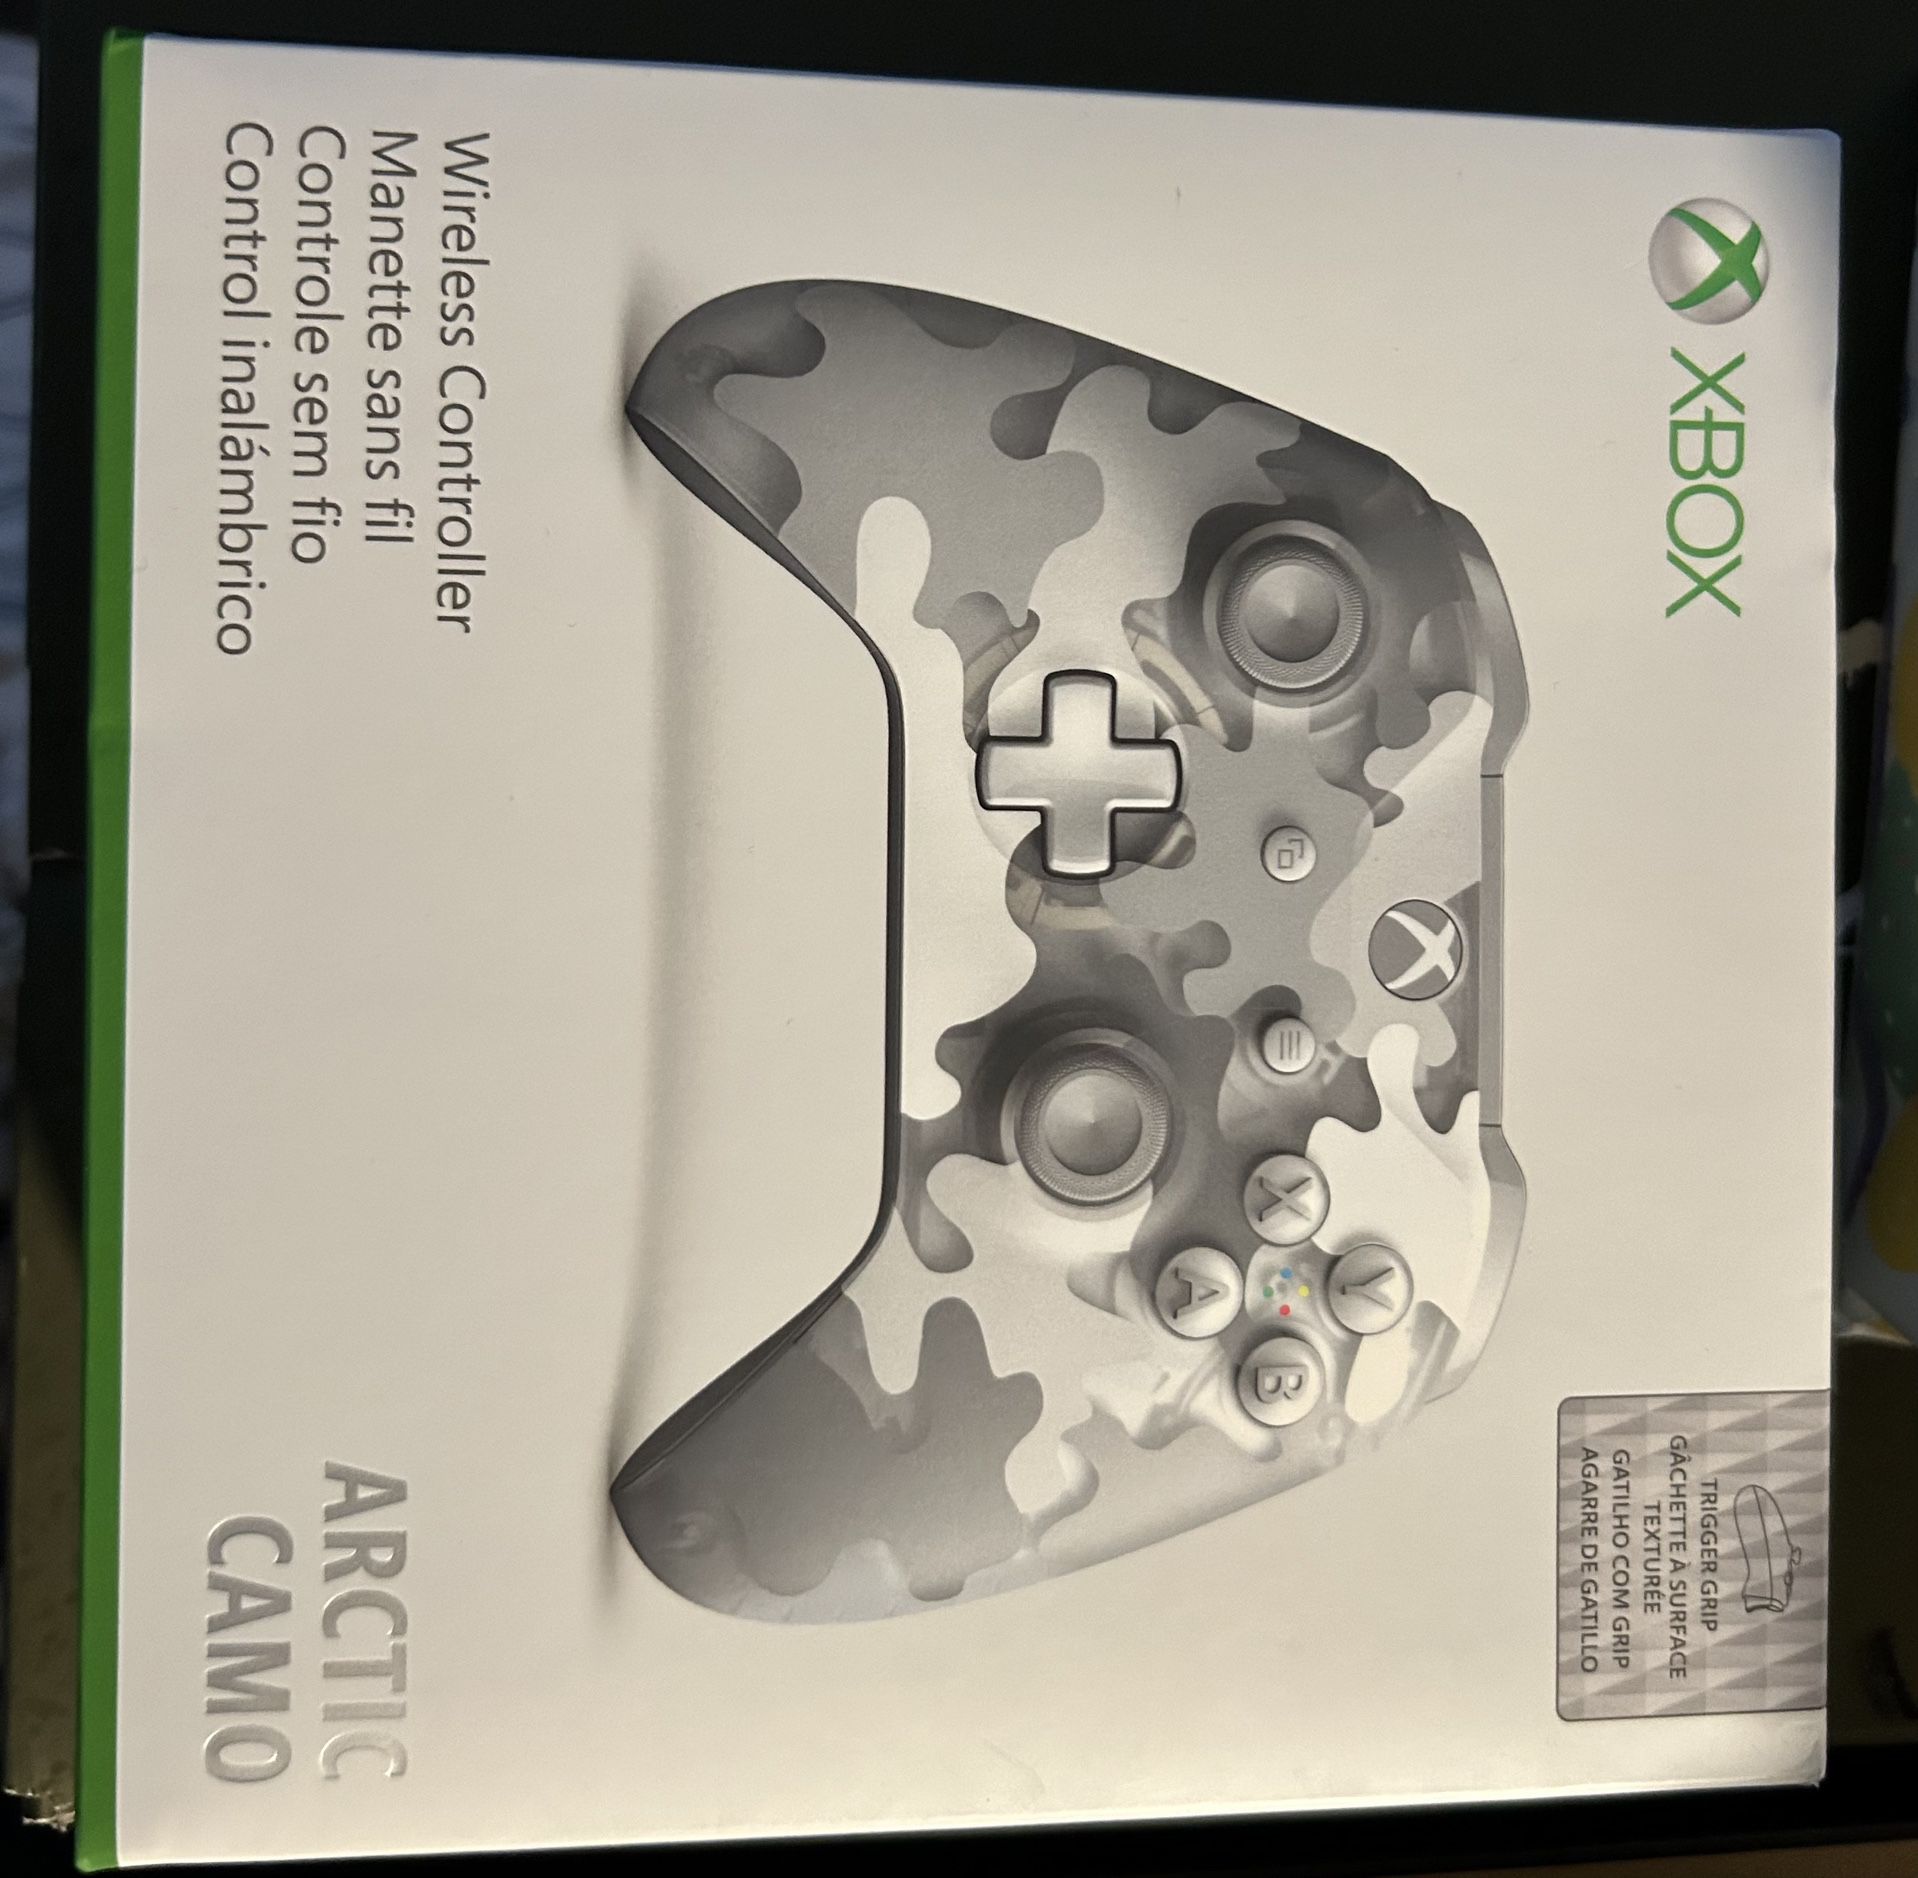 Xbox One Control 